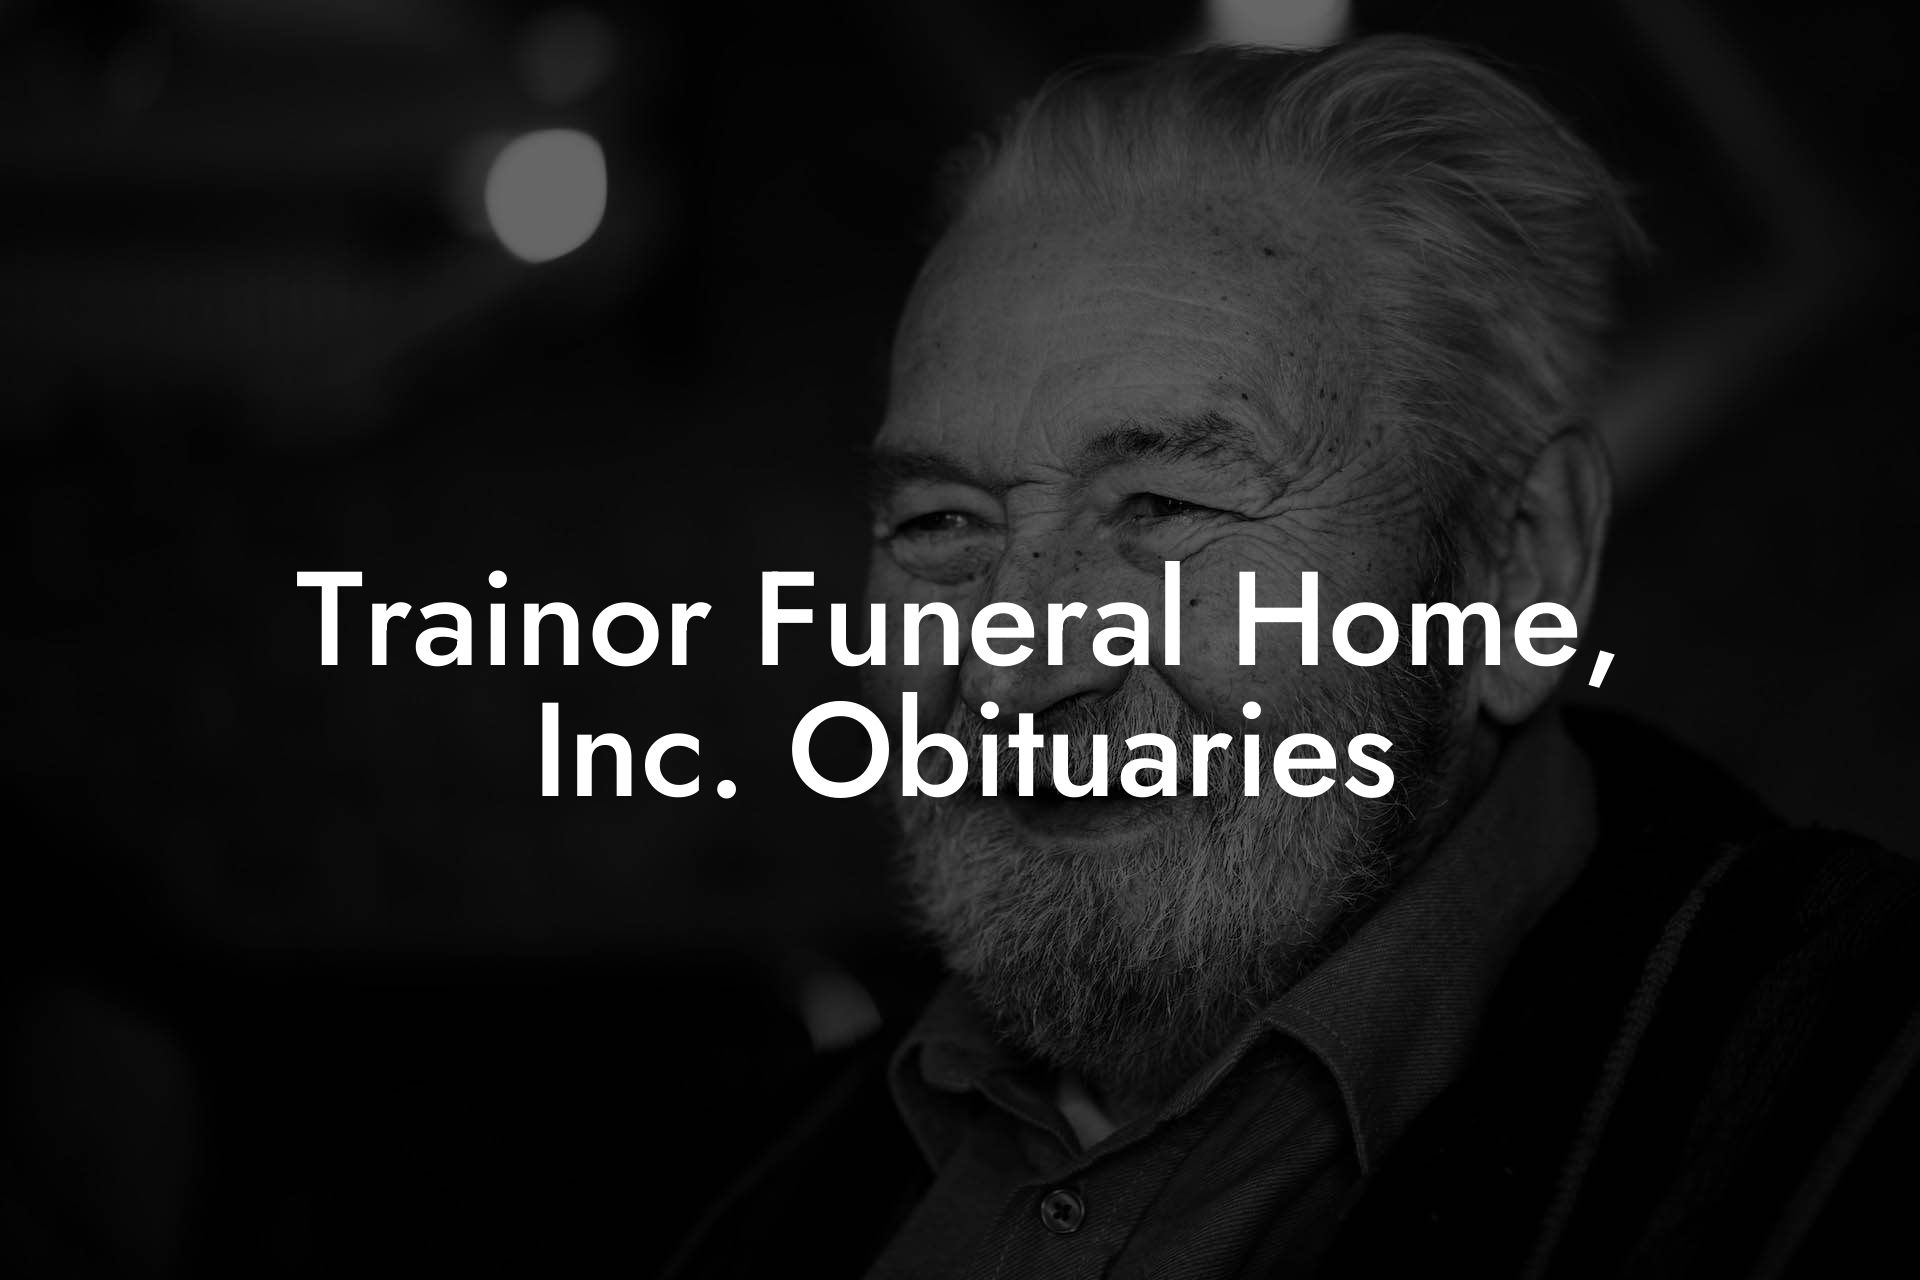 Trainor Funeral Home, Inc. Obituaries